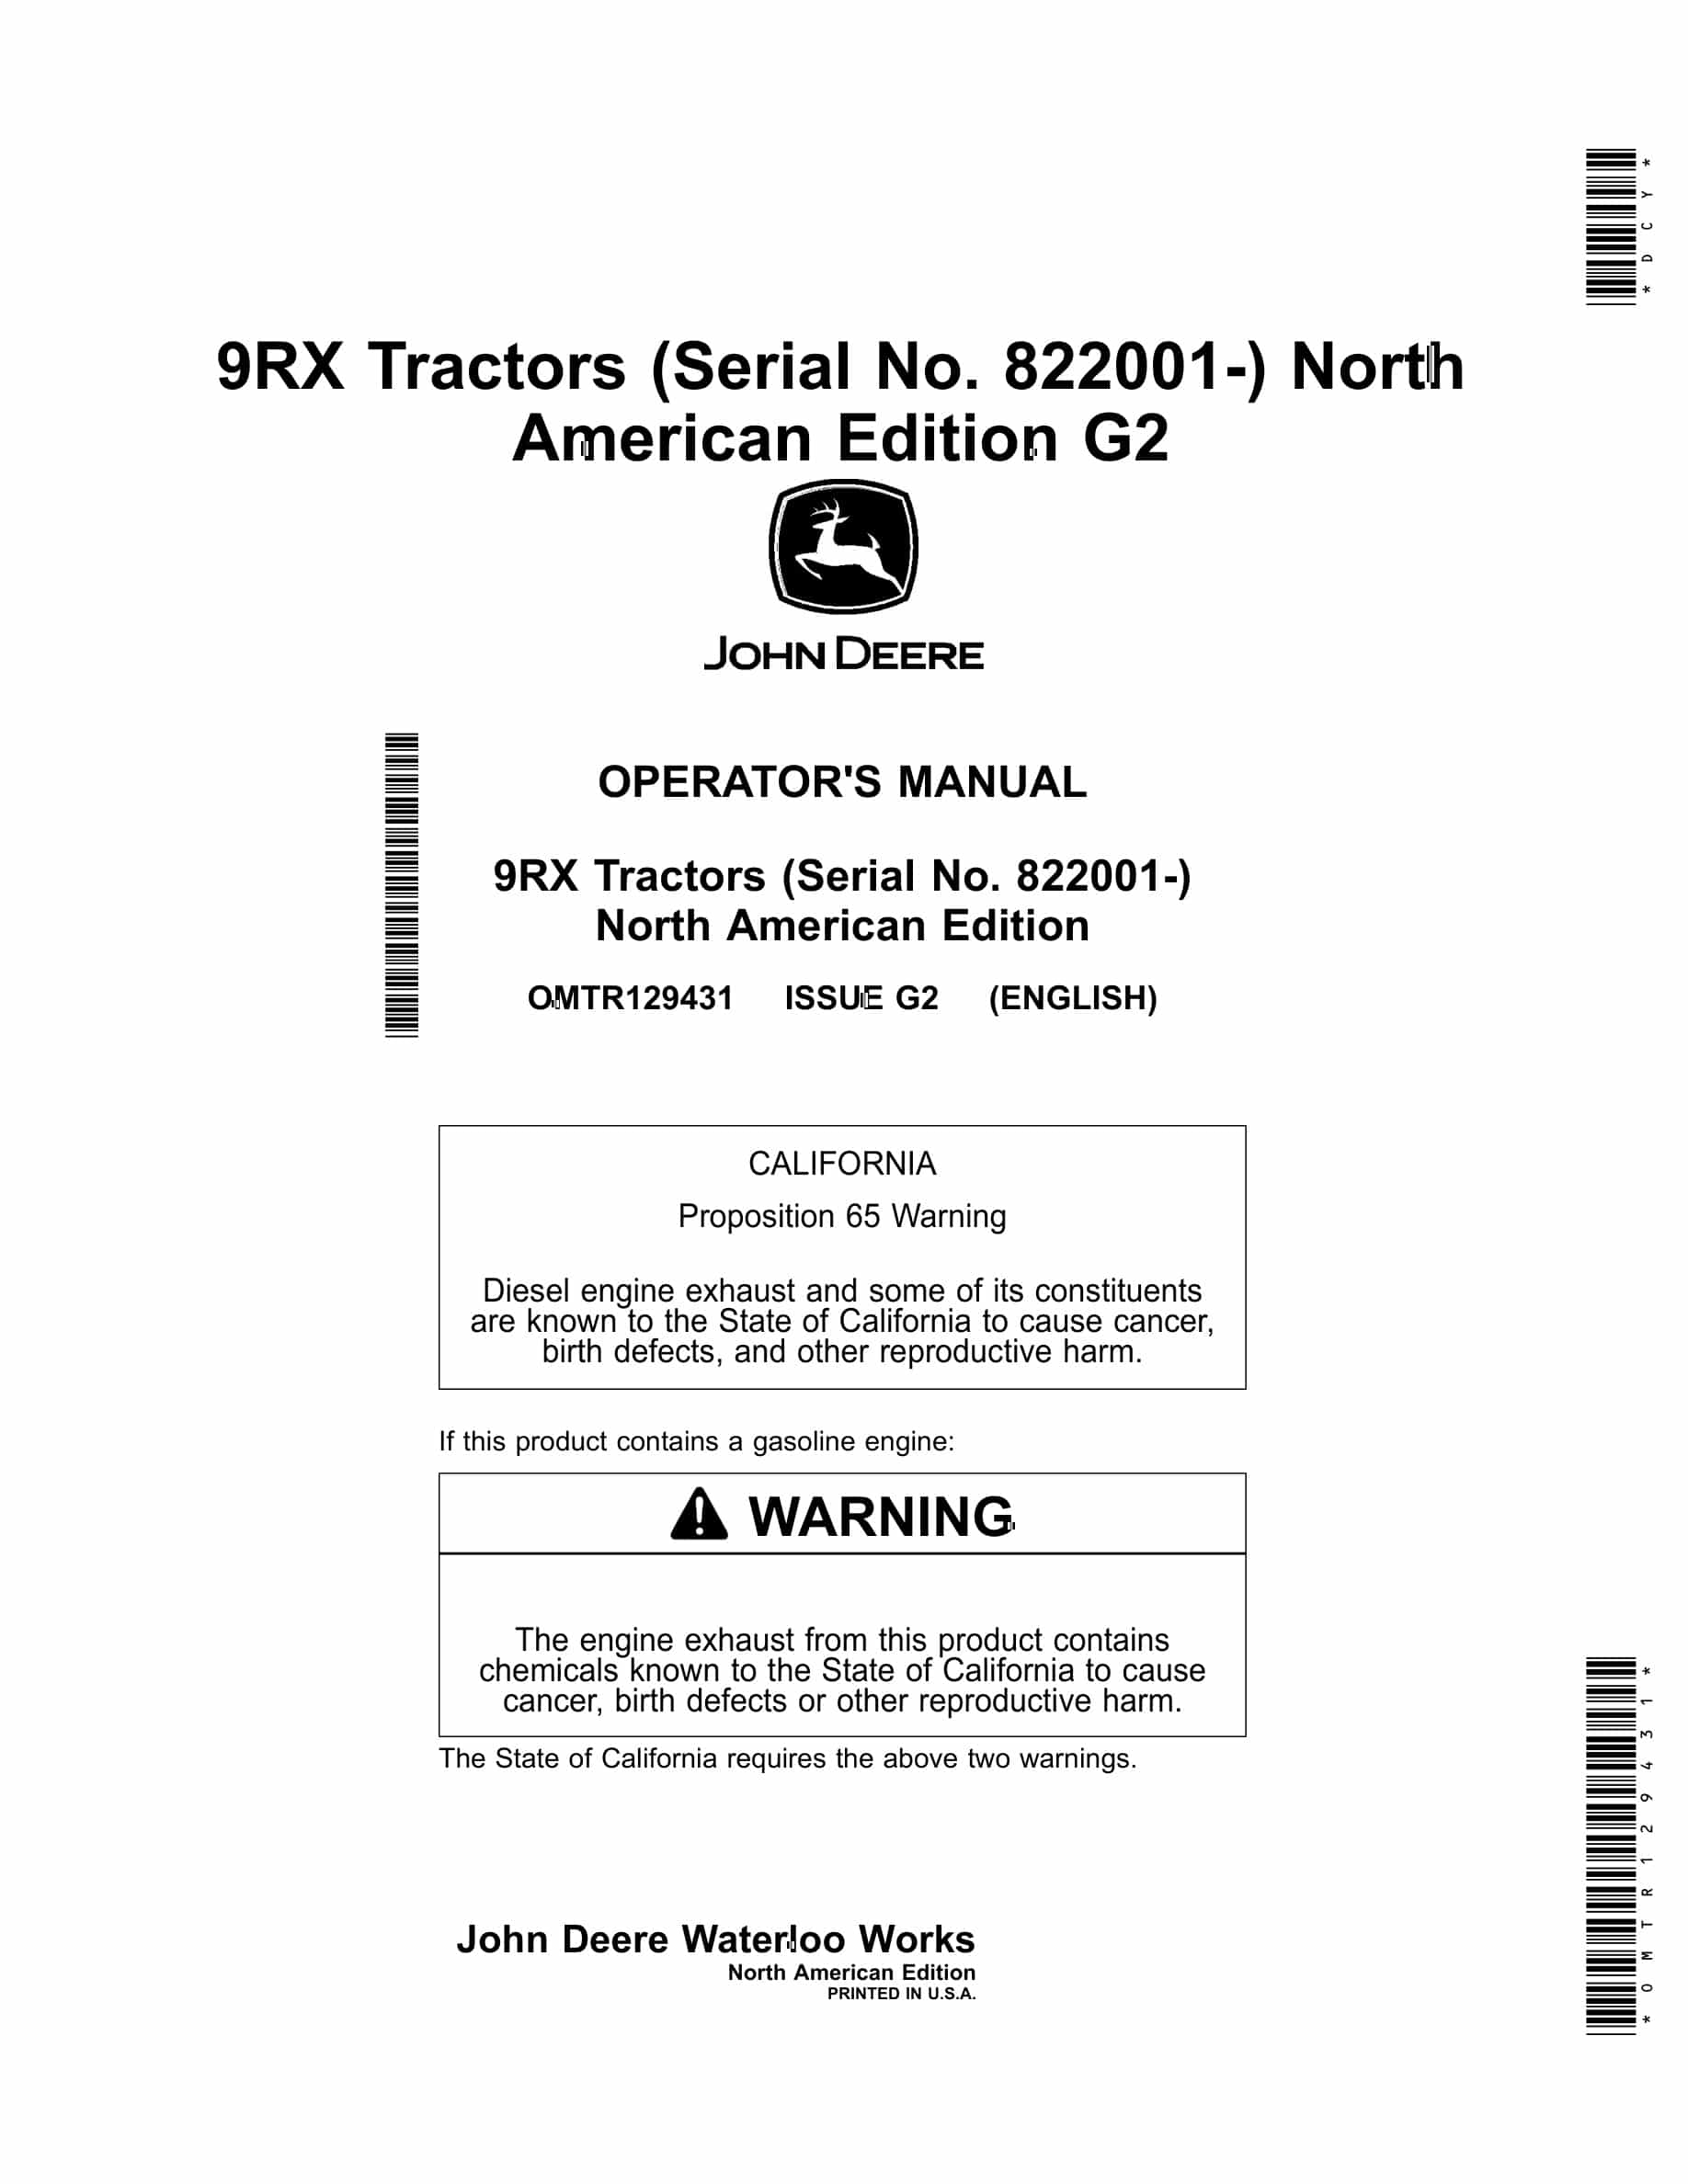 John Deere 9rx Tractors Operator Manuals OMTR129431-1